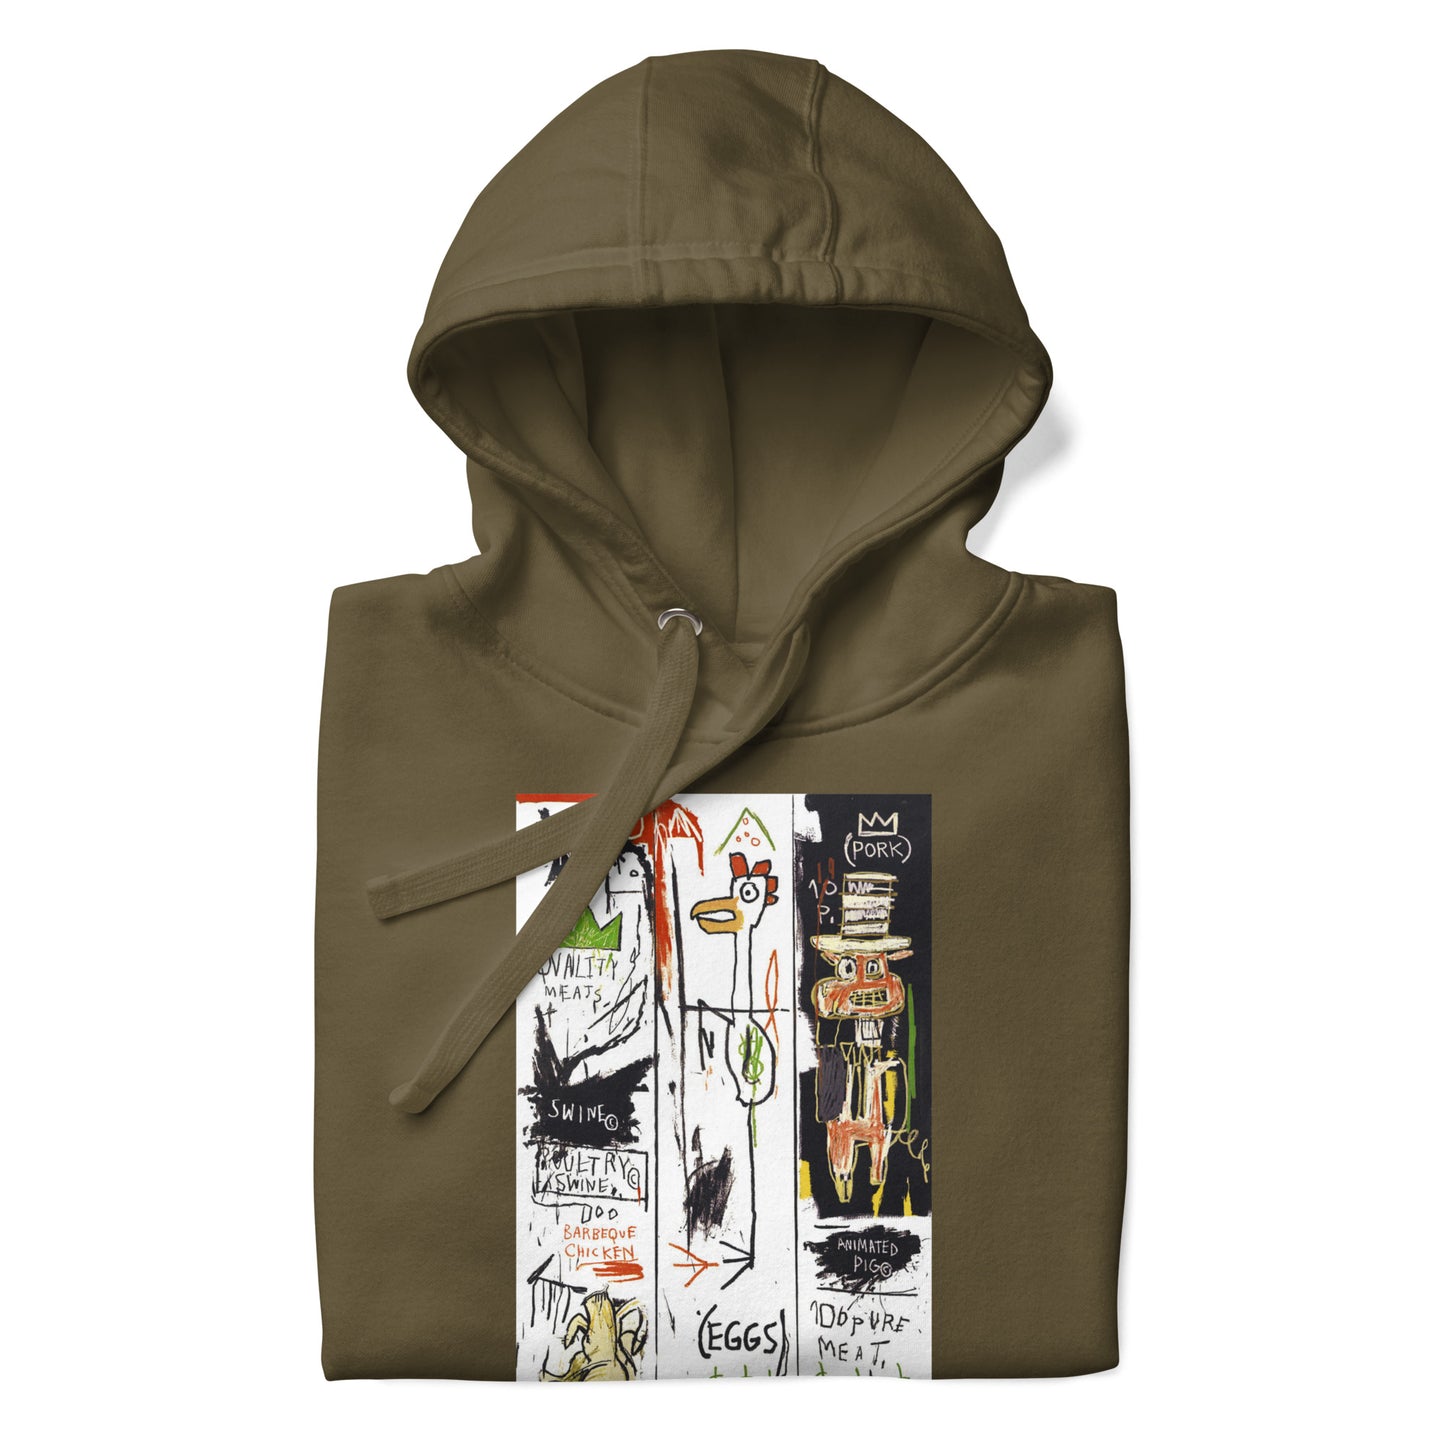 Jean-Michel Basquiat "Quality Meats for the Public" 1982 Artwork Printed Premium Streetwear Sweatshirt Hoodie Olive Green